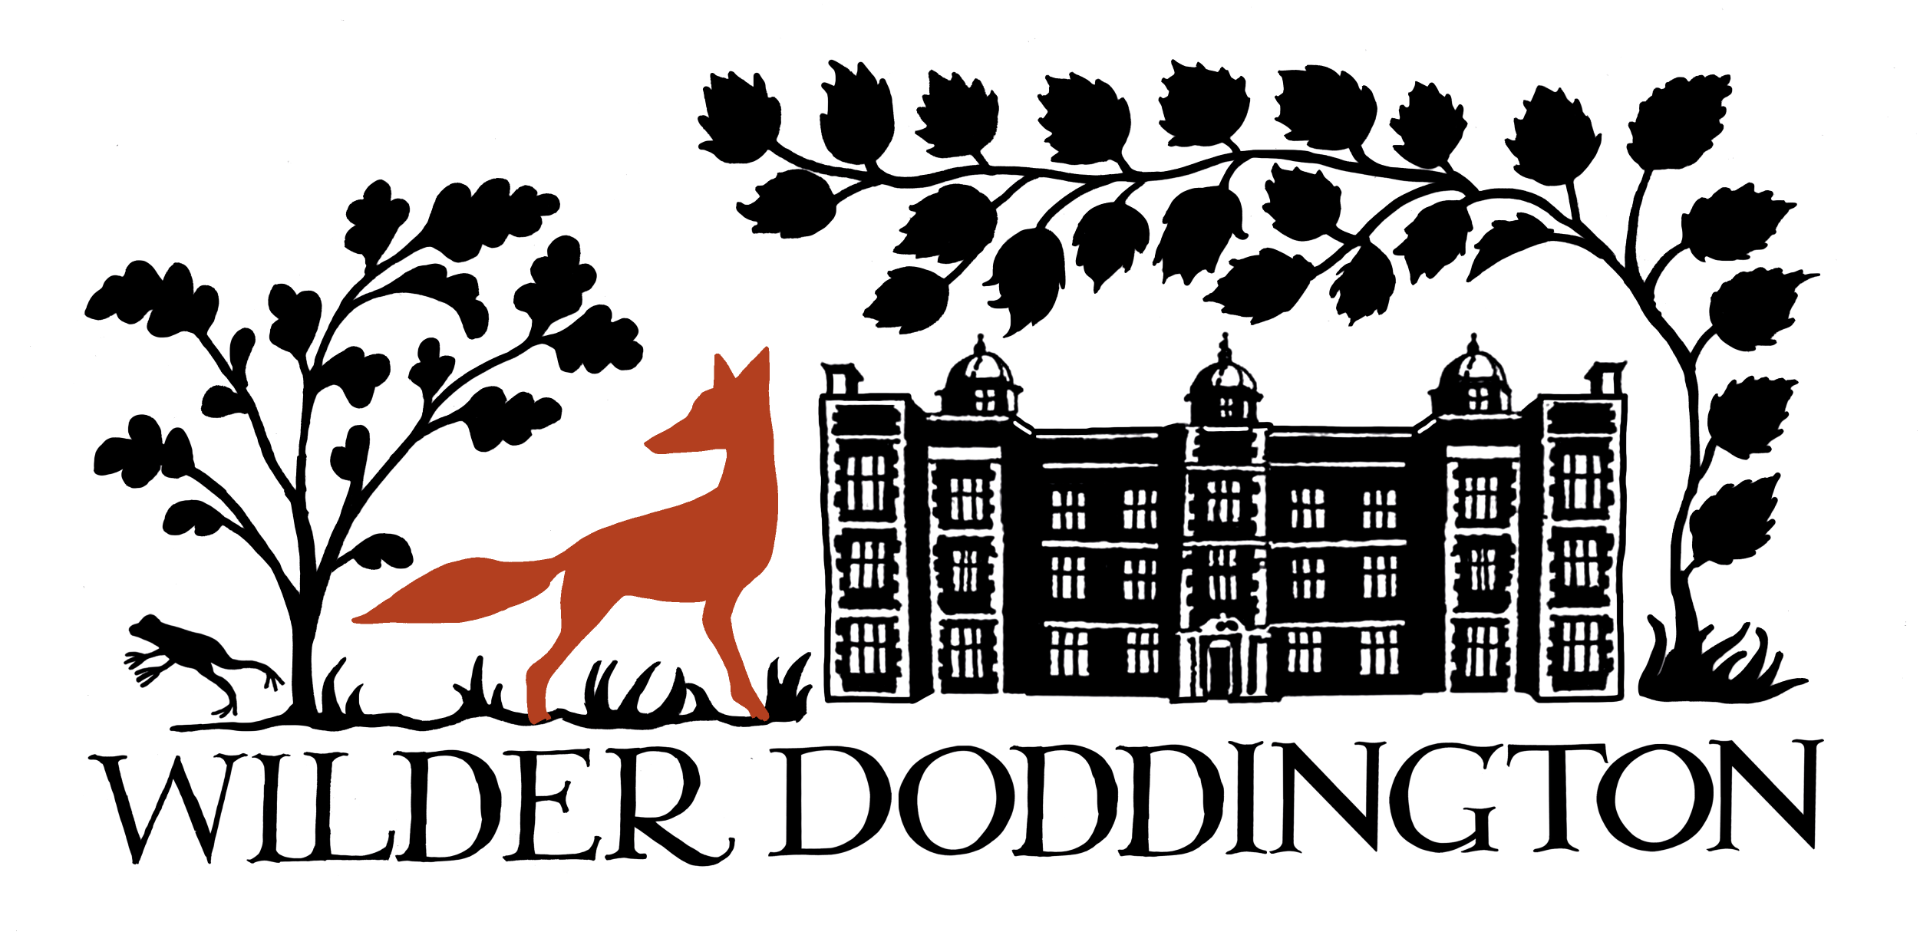 Image of wilder doddington logo